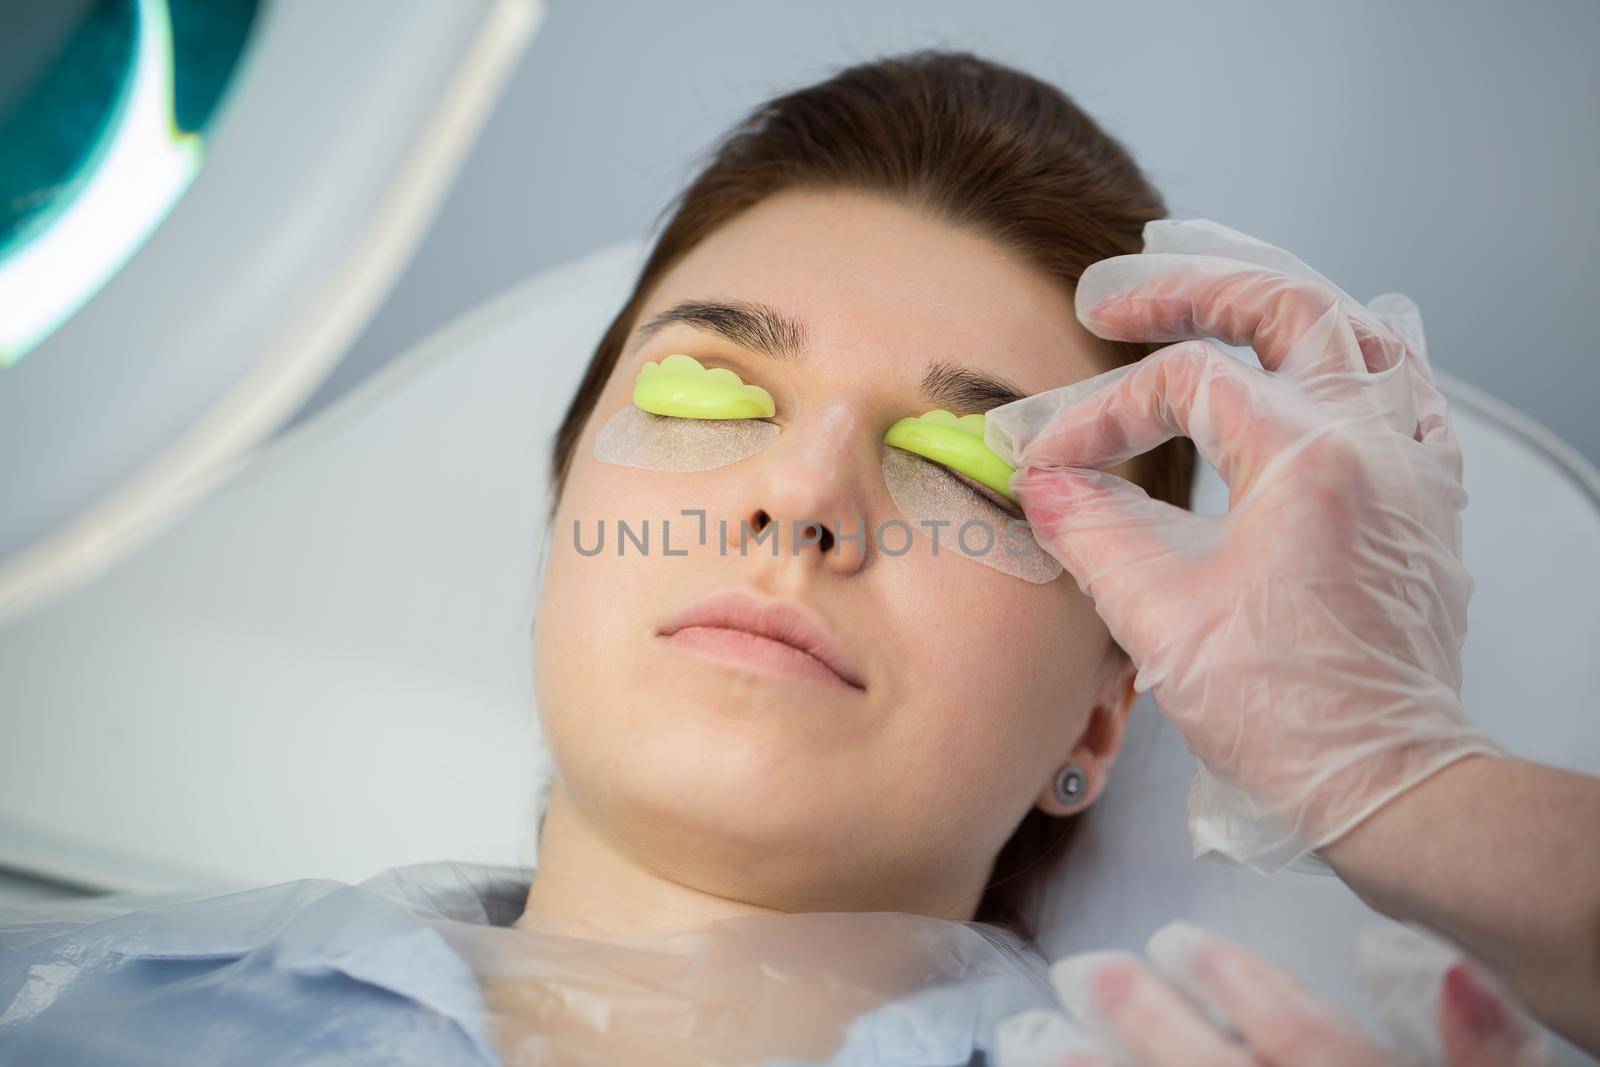 Eyelash Extension Procedure. Woman Eye with Long Eyelashes. Lashes, close up, selected focus